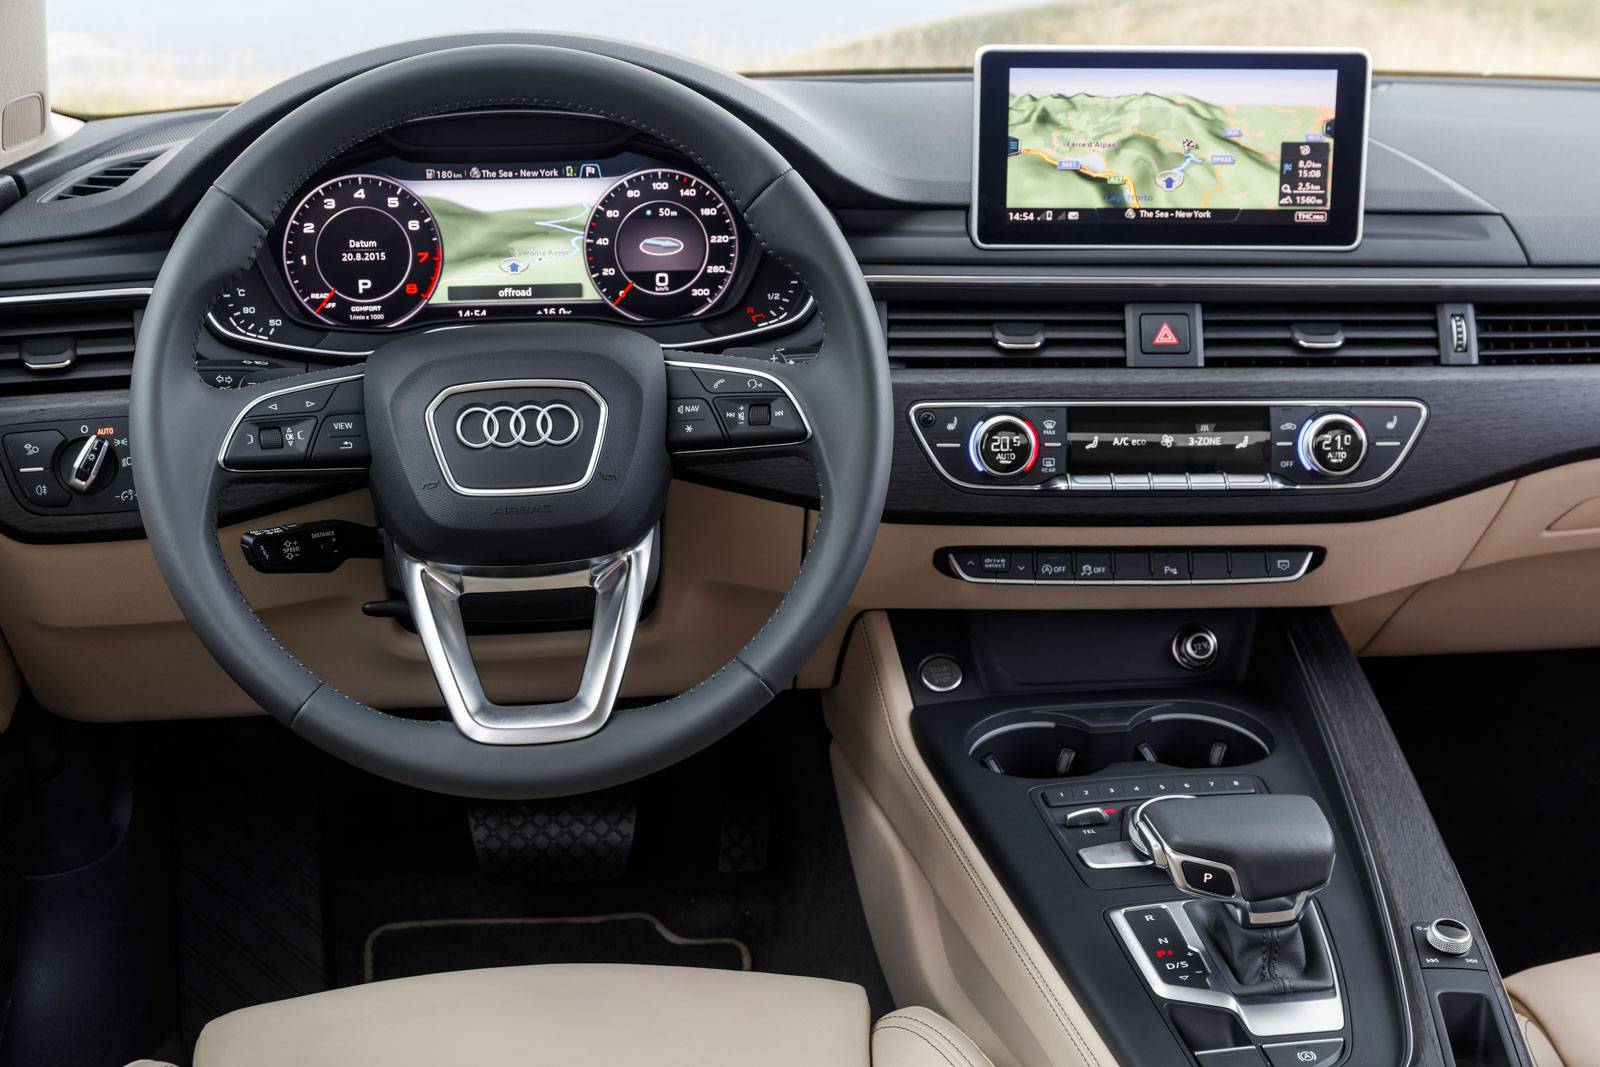 Audi A4 2016 User Manual